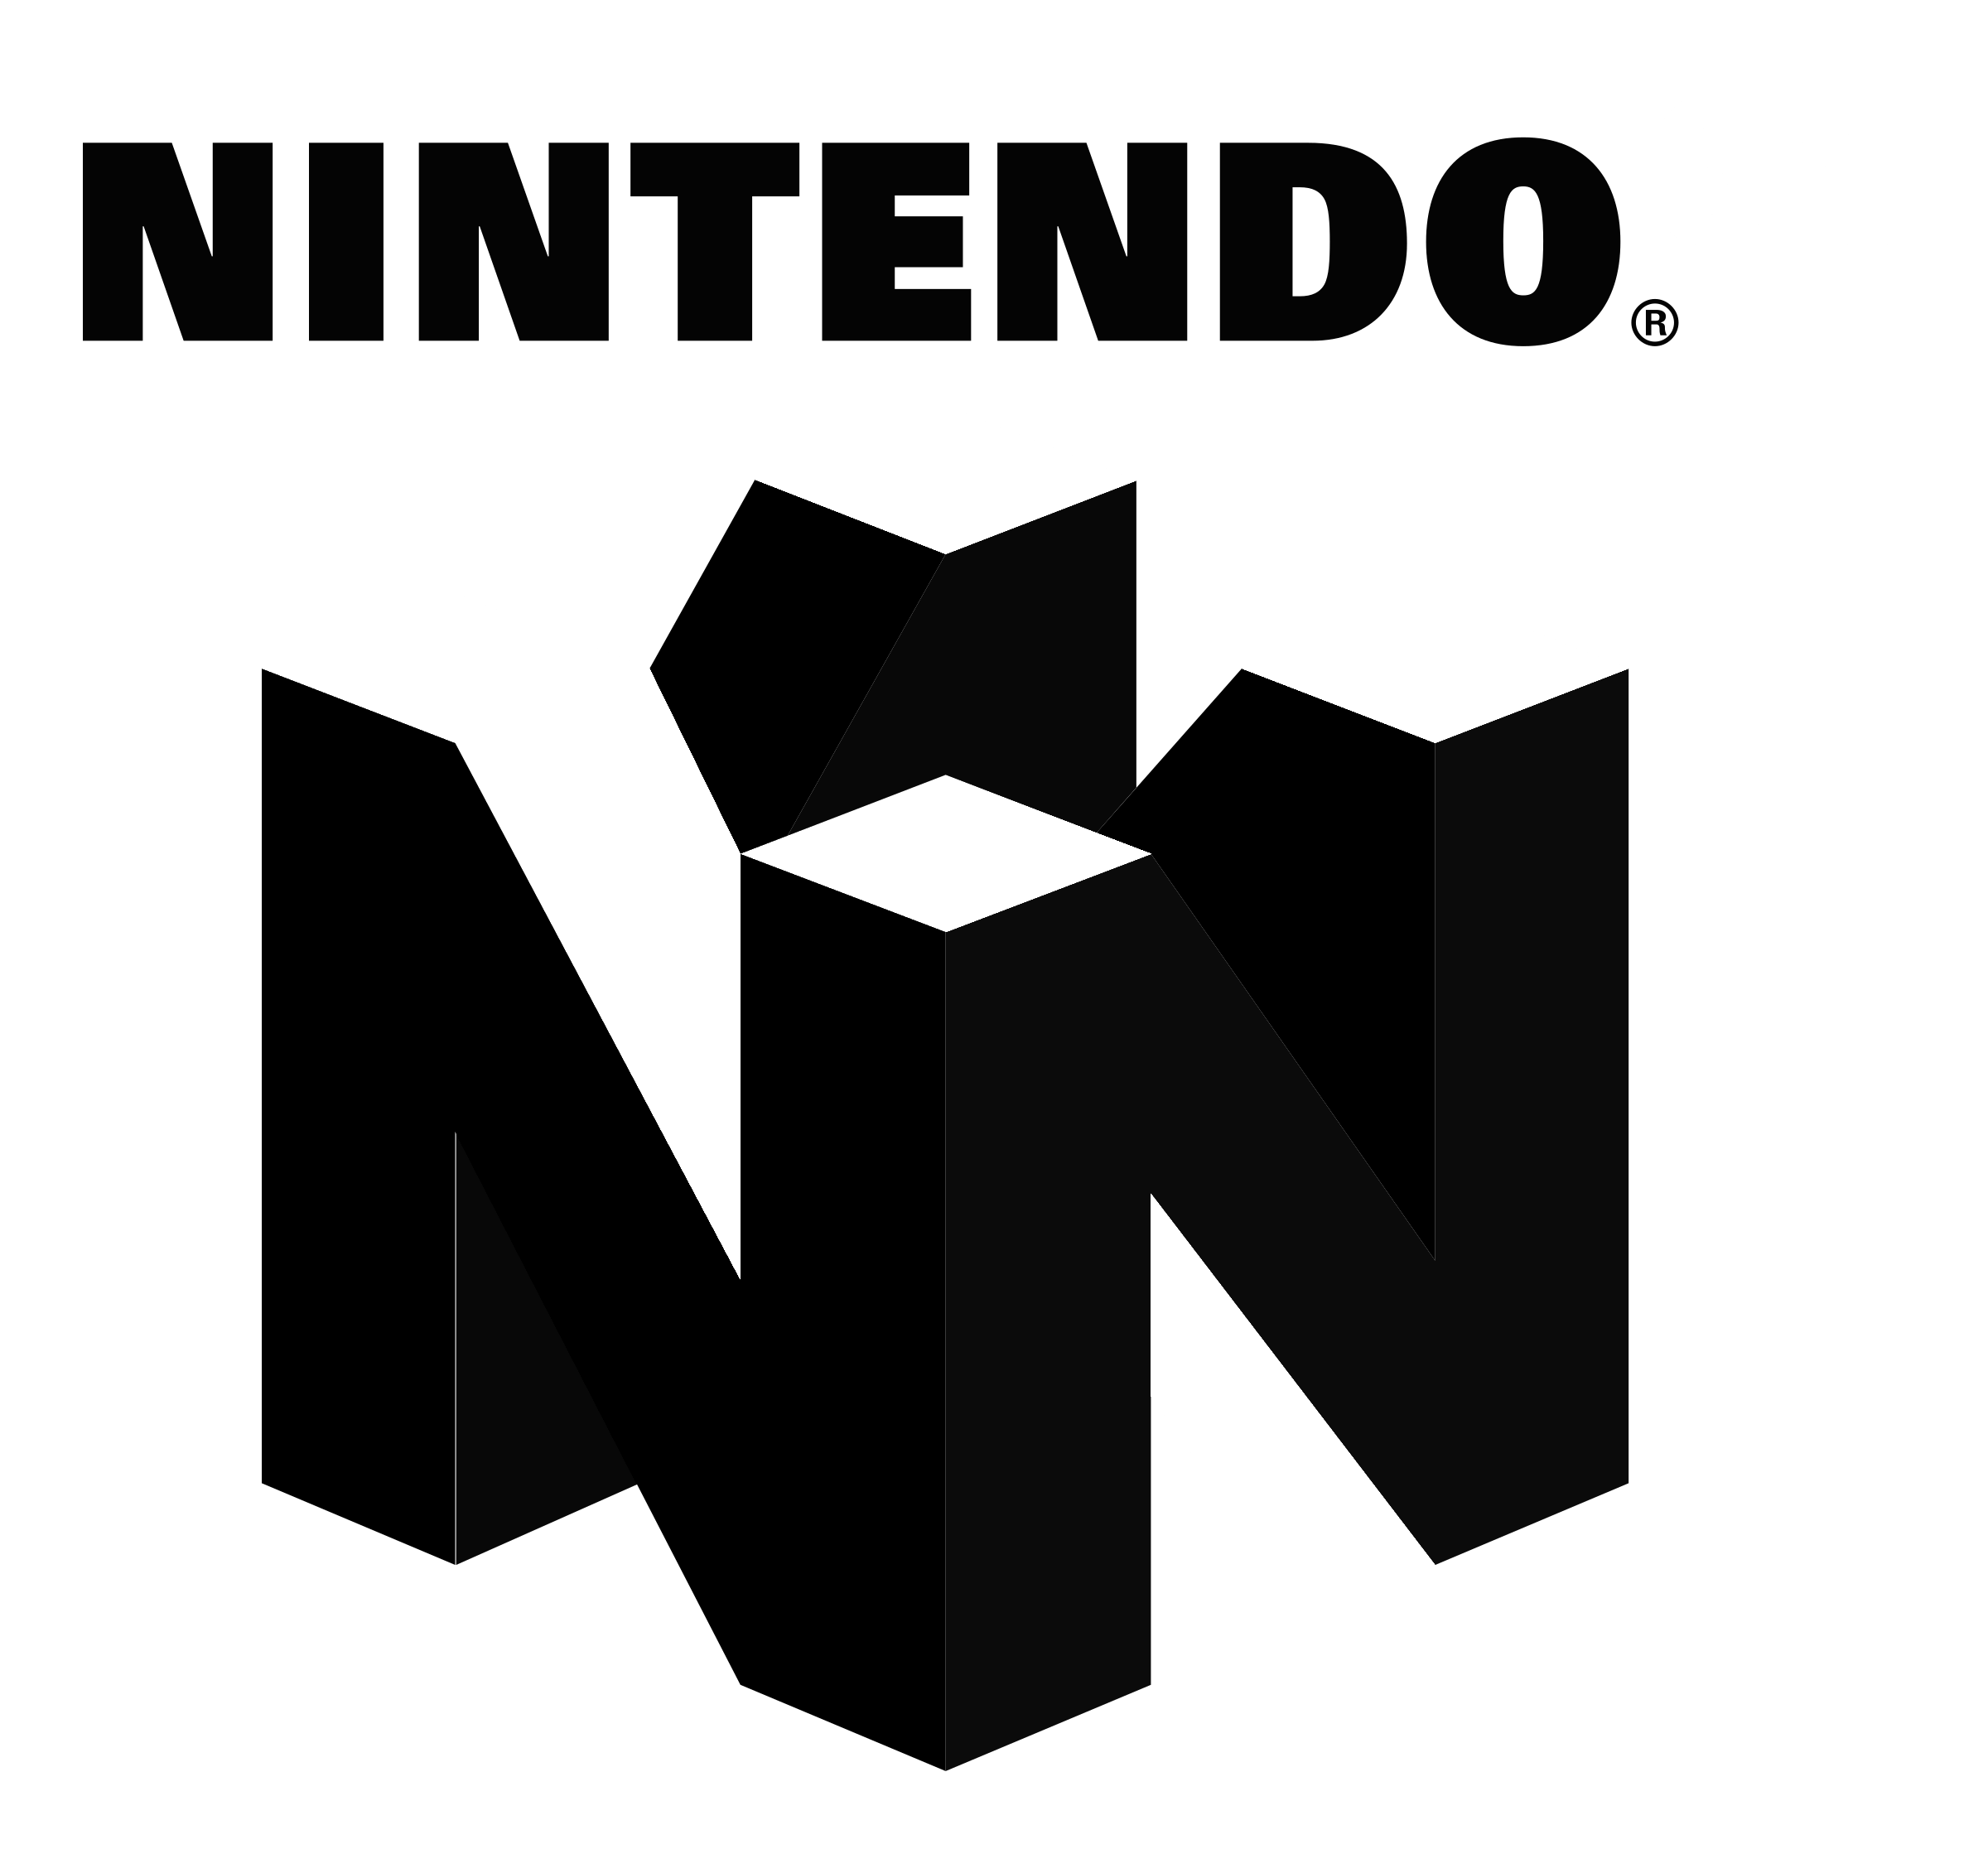 N64 Logo - N64 Logo PNG Transparent & SVG Vector - Freebie Supply